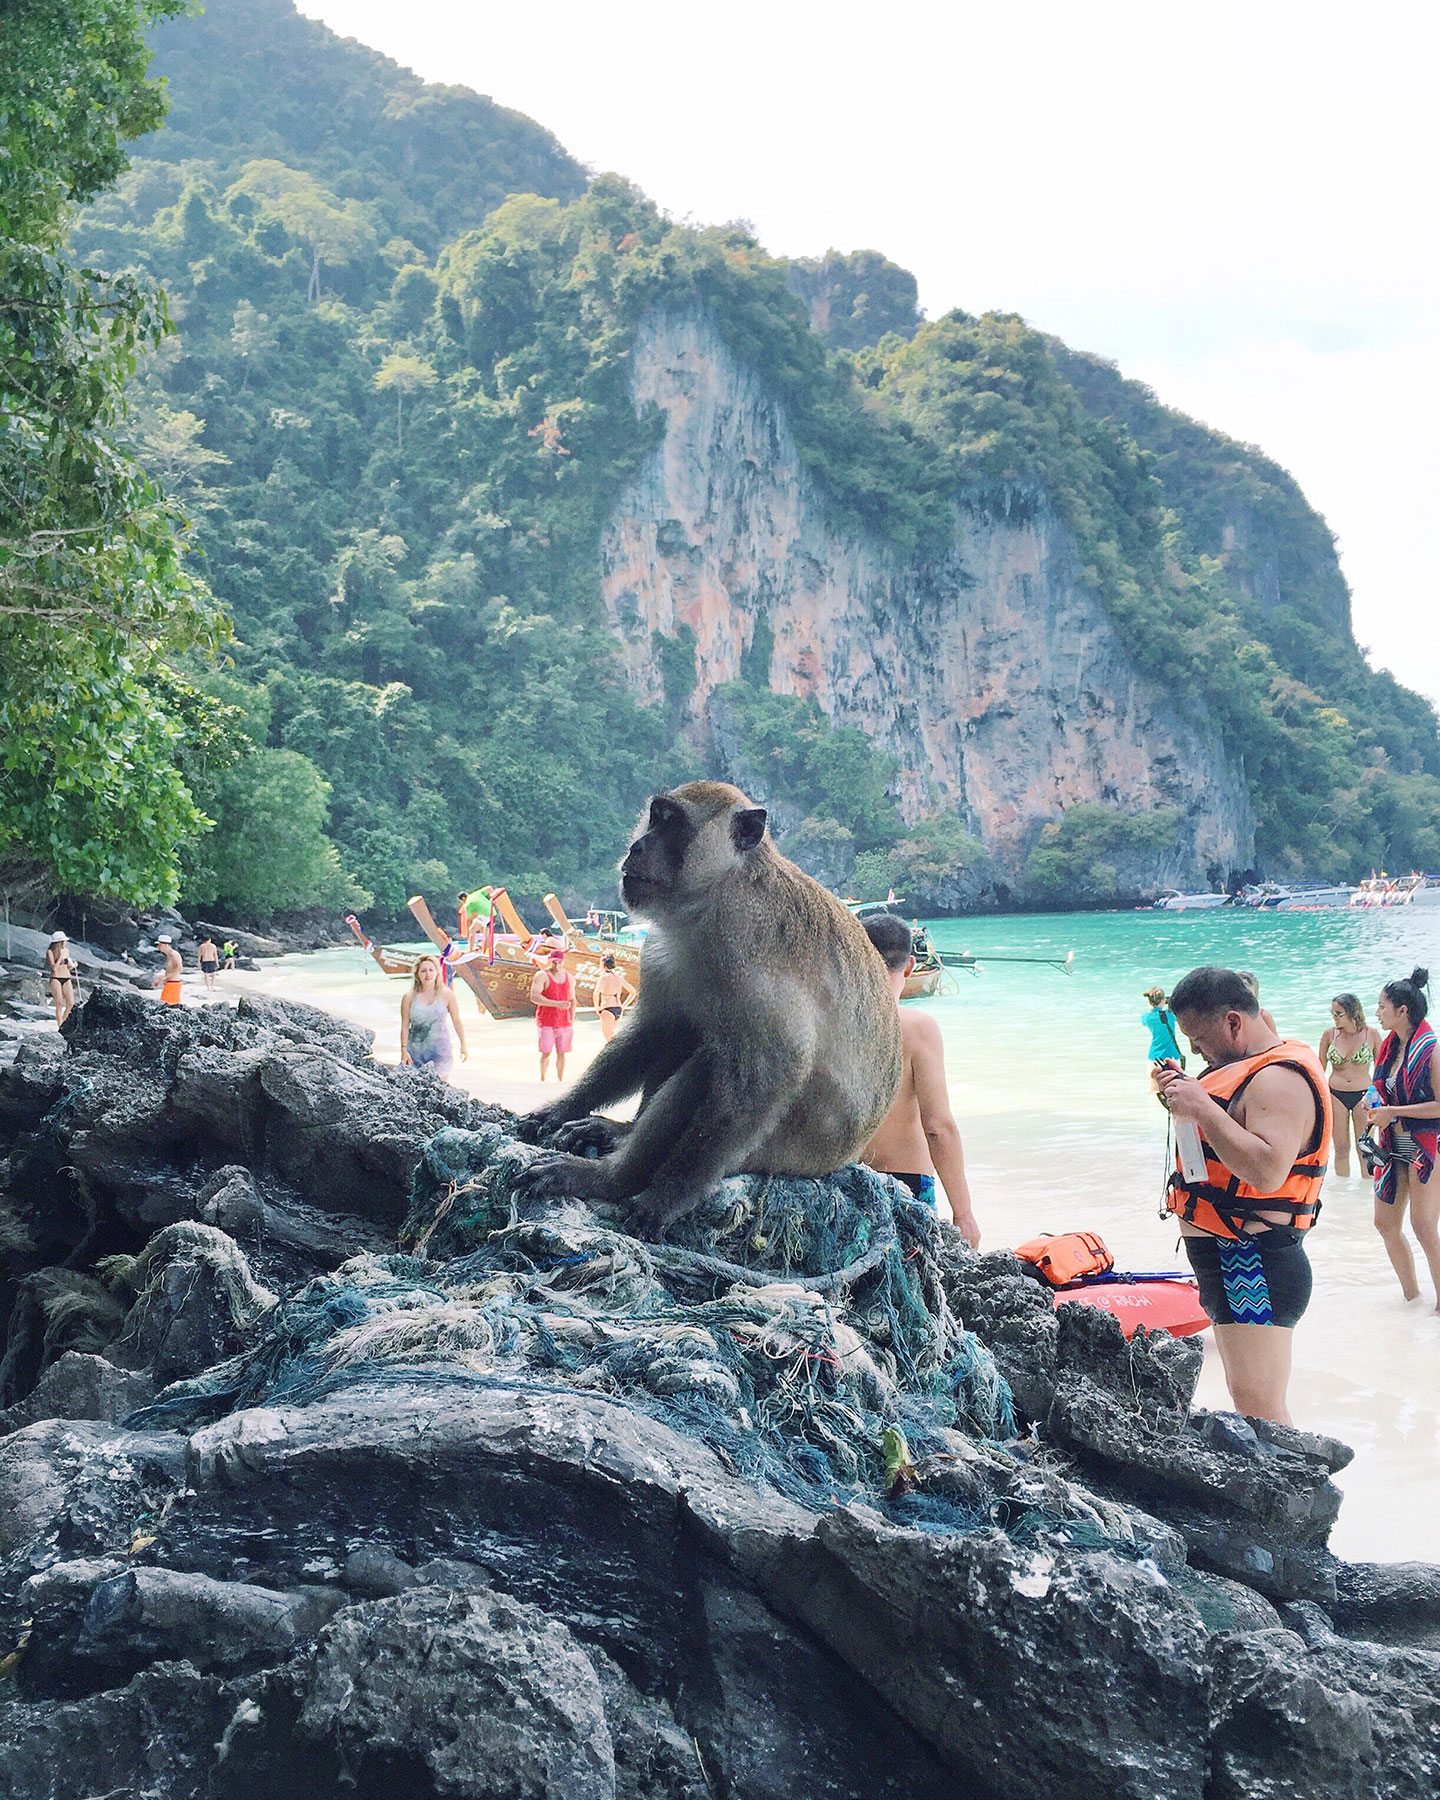  Monkey beach in the Phi Phi Islands 